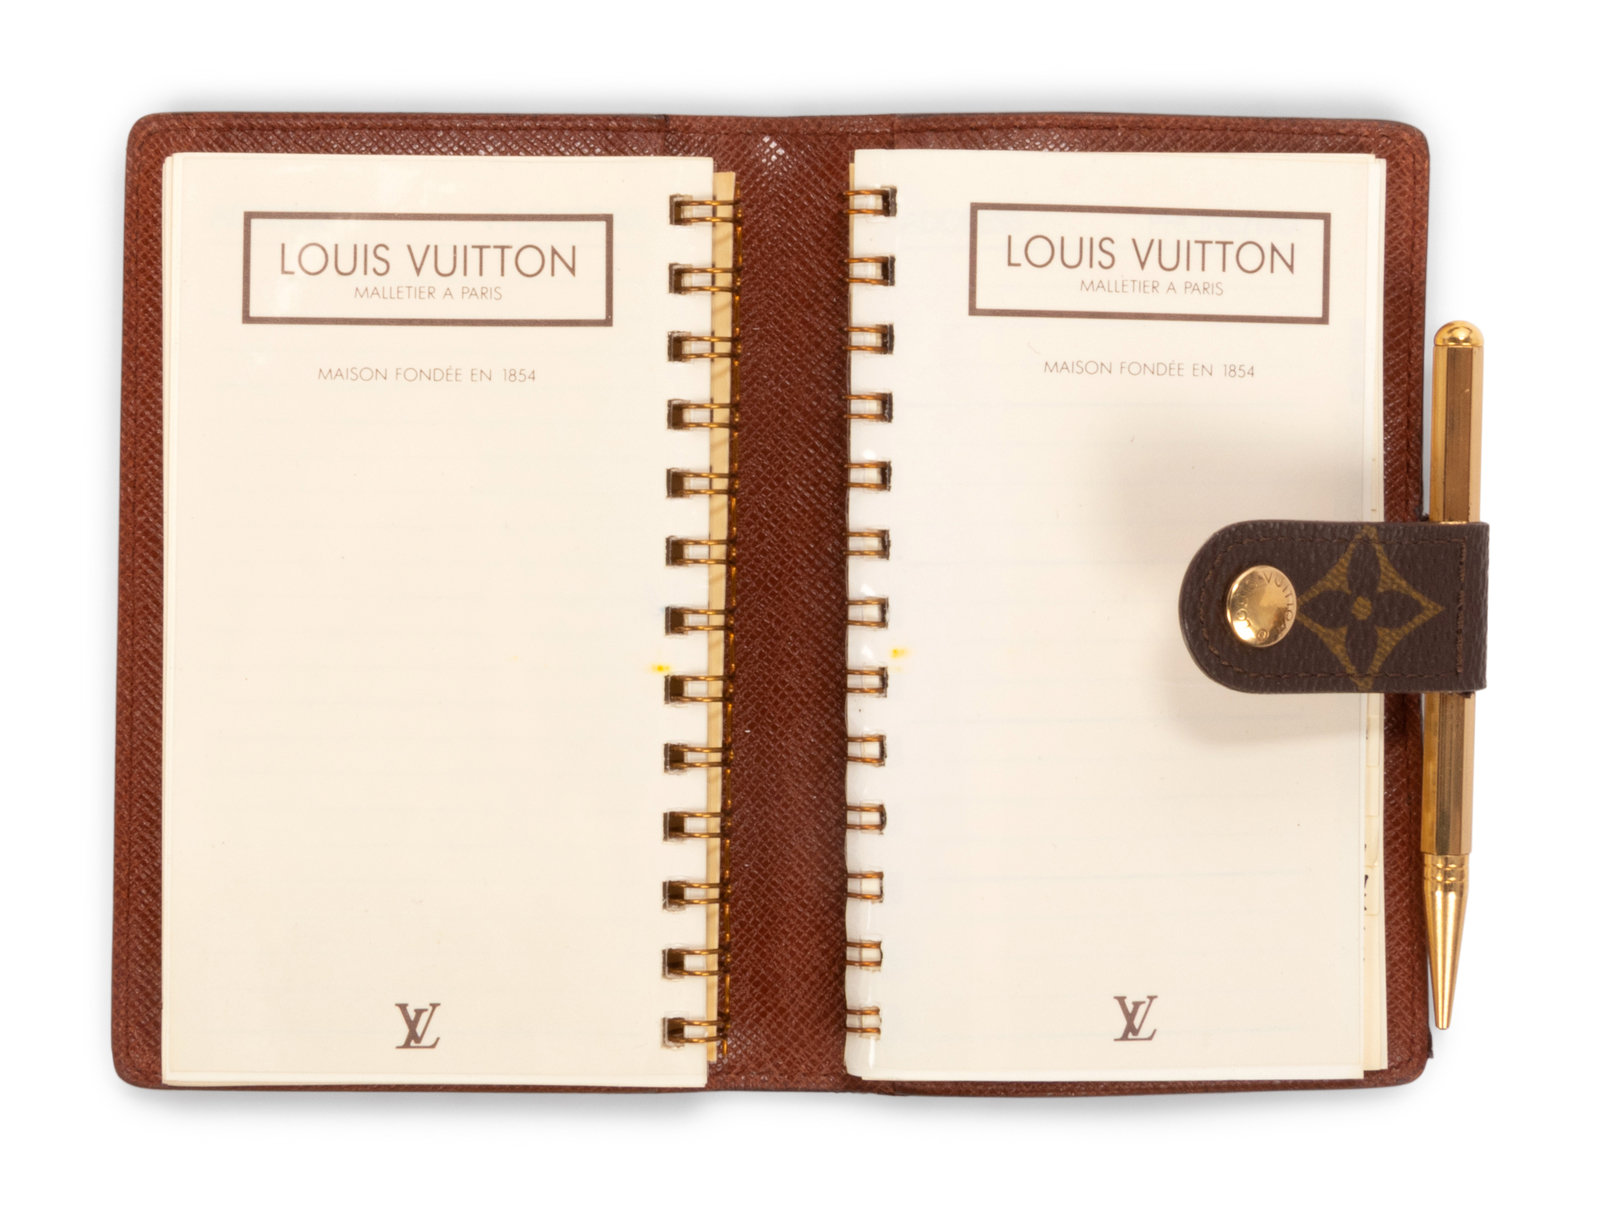 Sold at Auction: Louis Vuitton, Louis Vuitton Monogram Small Agenda Cover